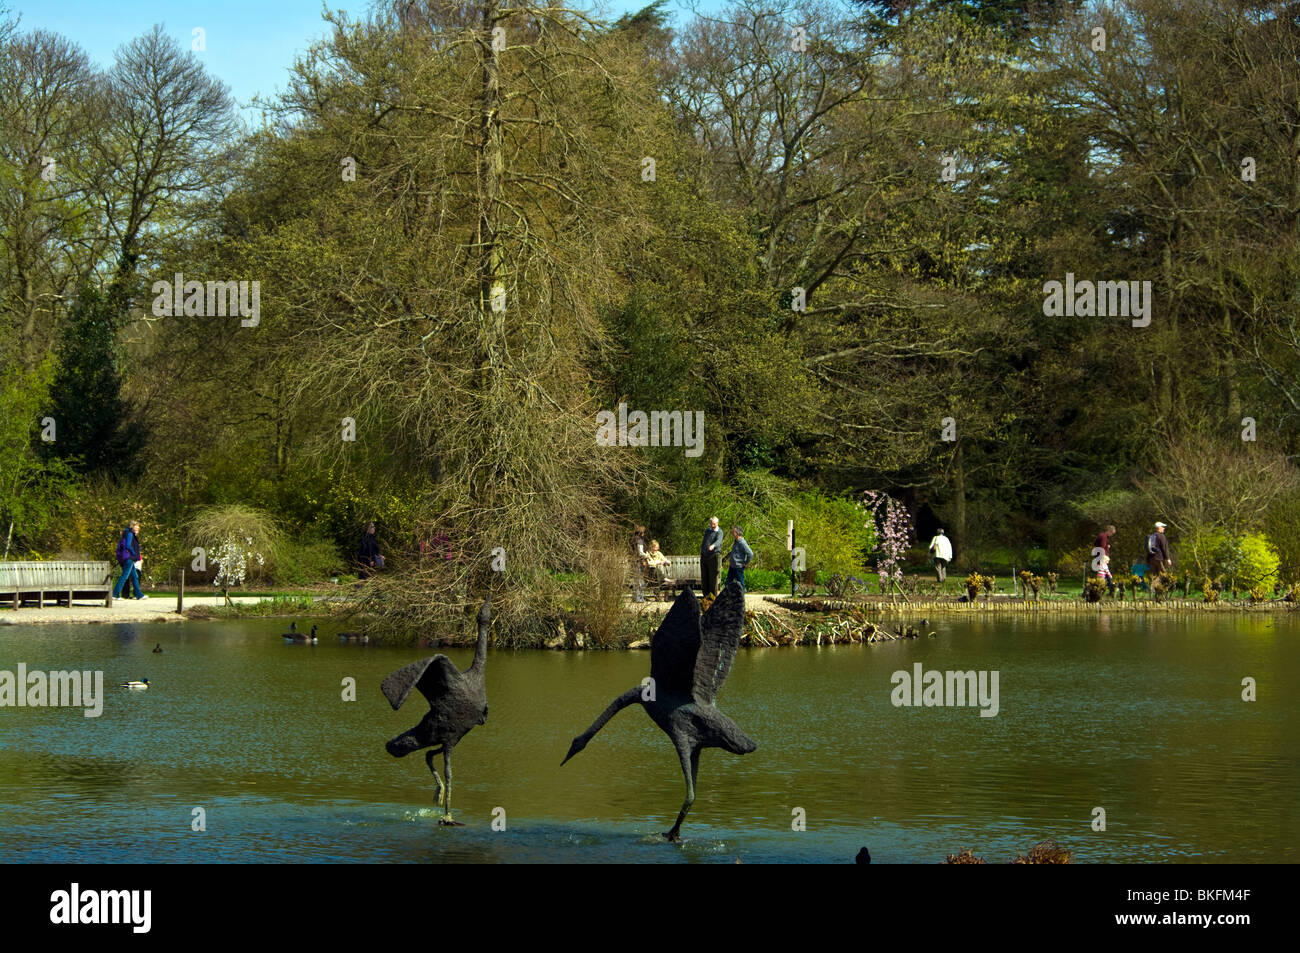 Scene At The Lake RHS Wisley Gardens Surrey England Stock Photo